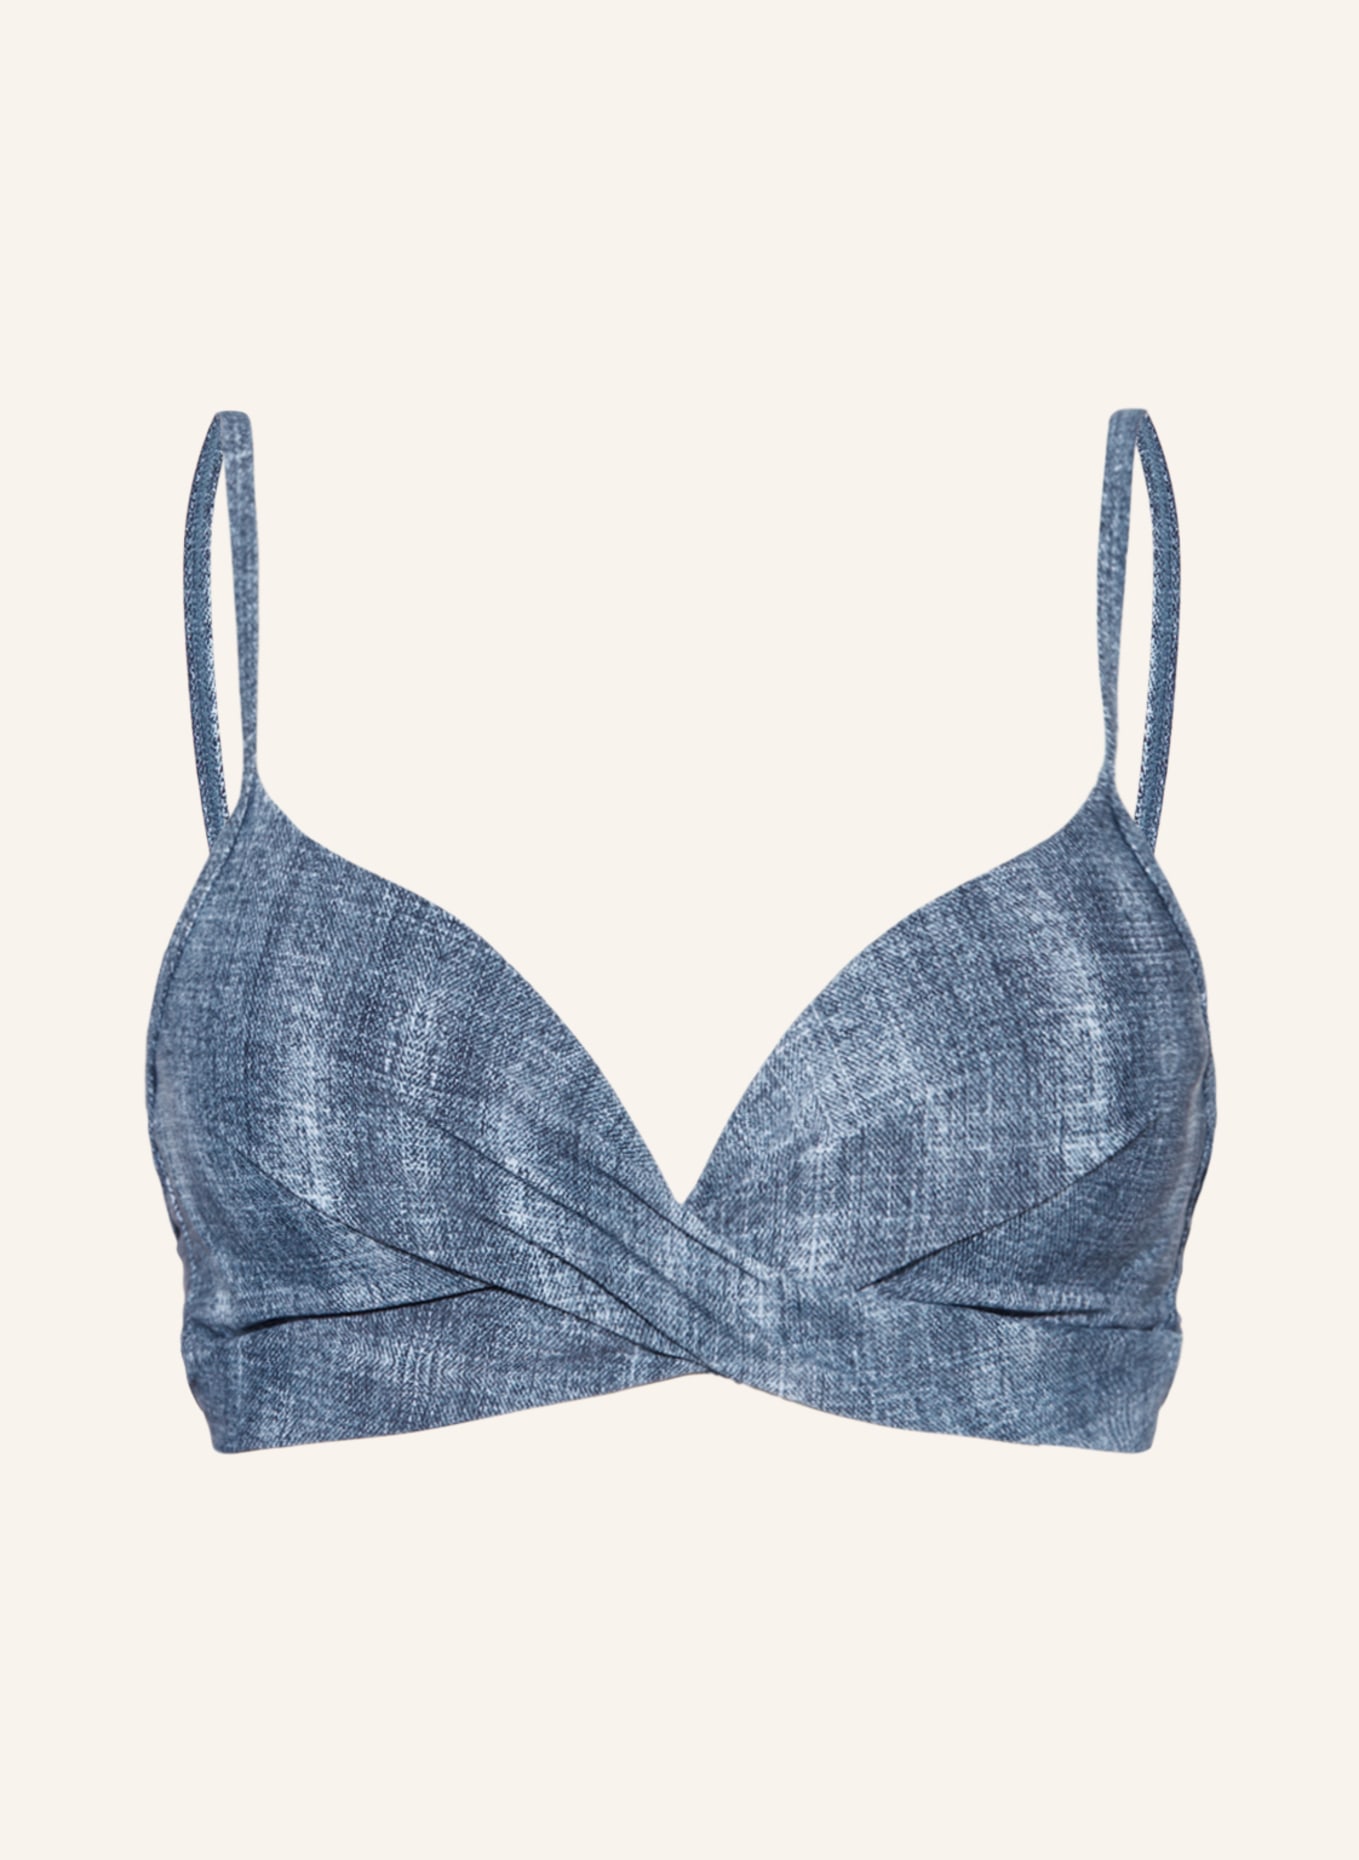 BEACHLIFE Bralette-Bikini-Top DENIM, Farbe: BLAU (Bild 1)